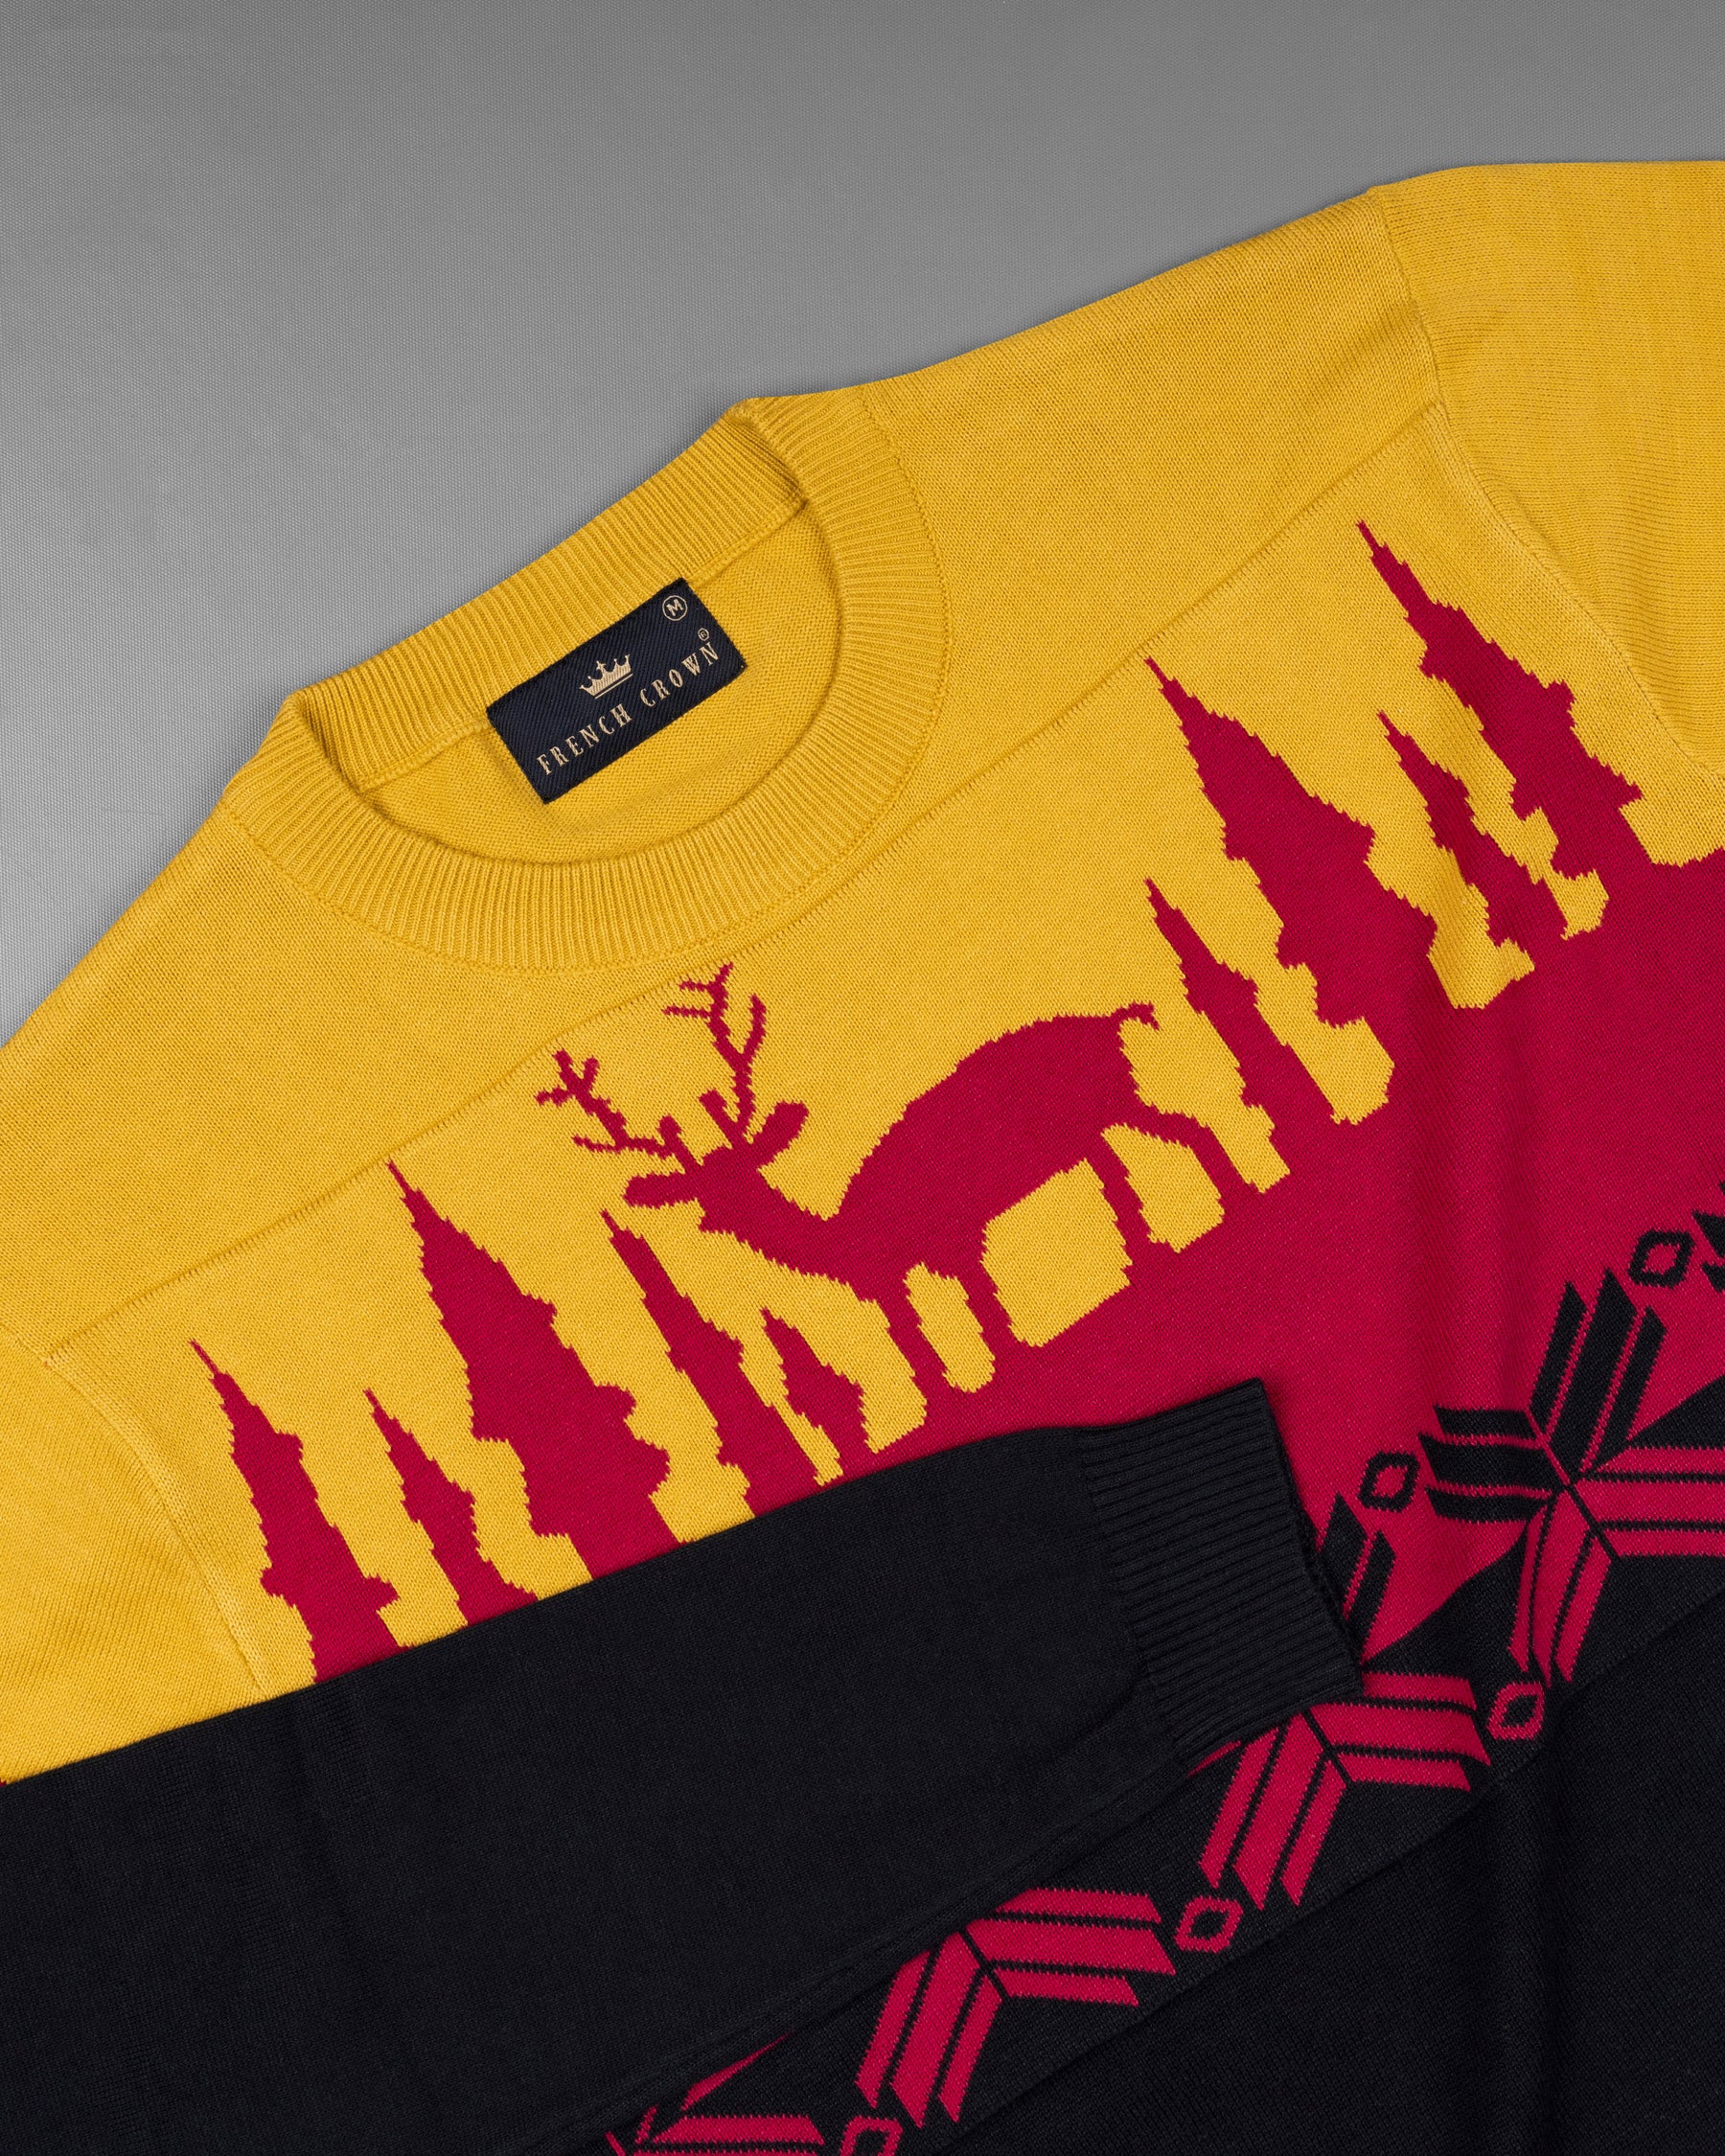 Gold Tips with Carmine Red and Black Jacquard Deer Textured Super Soft Premium Jersey Sweatshirt TS513-S, TS513-M, TS513-L, TS513-XL, TS513-XXL